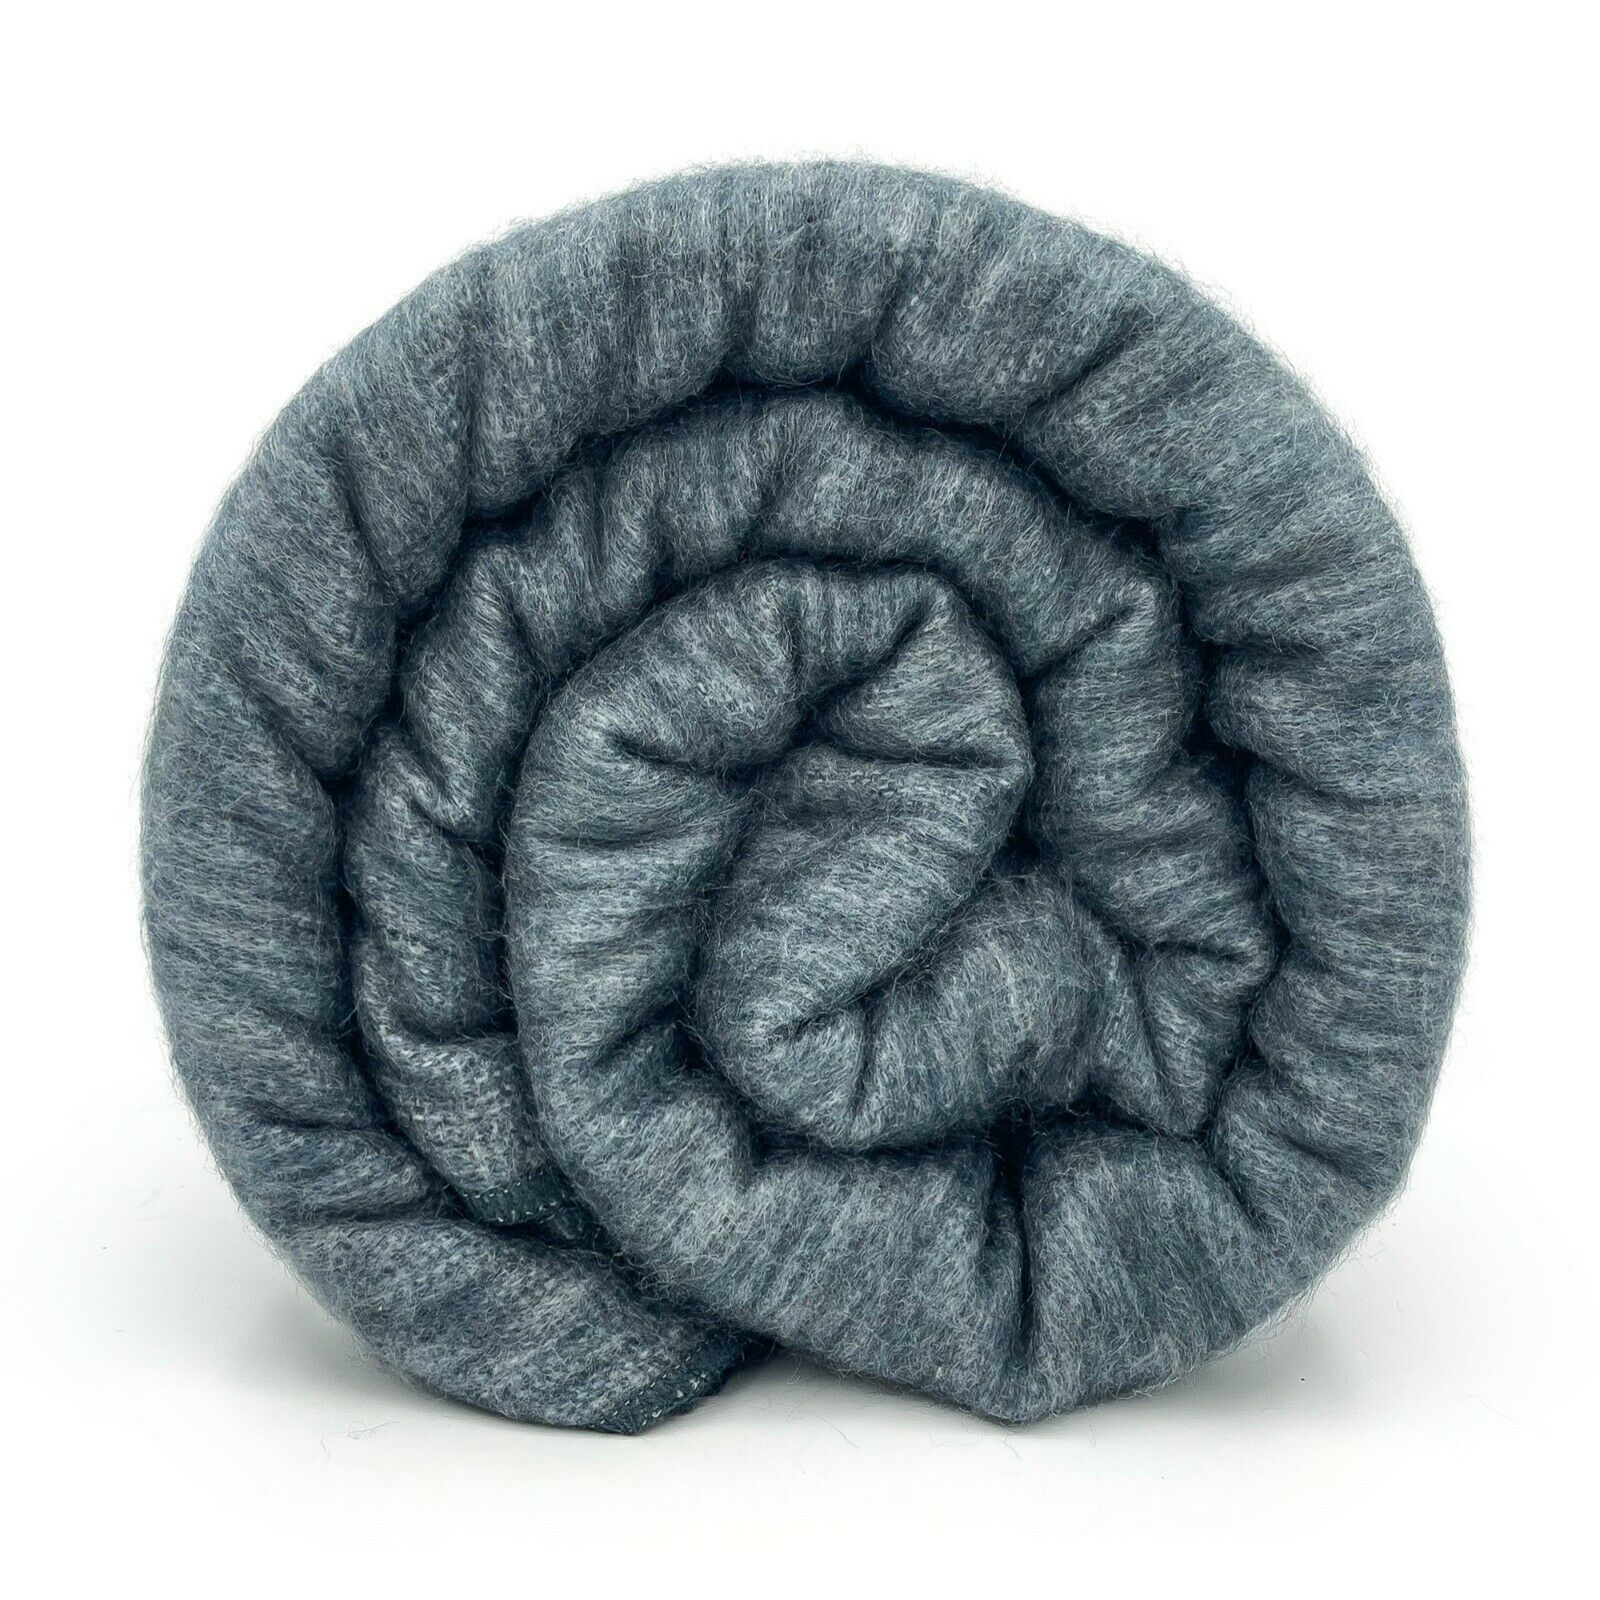 Llacao - Baby Alpaca Wool Throw Blanket / Sofa Cover - Queen 93" x 68" - plain graphite